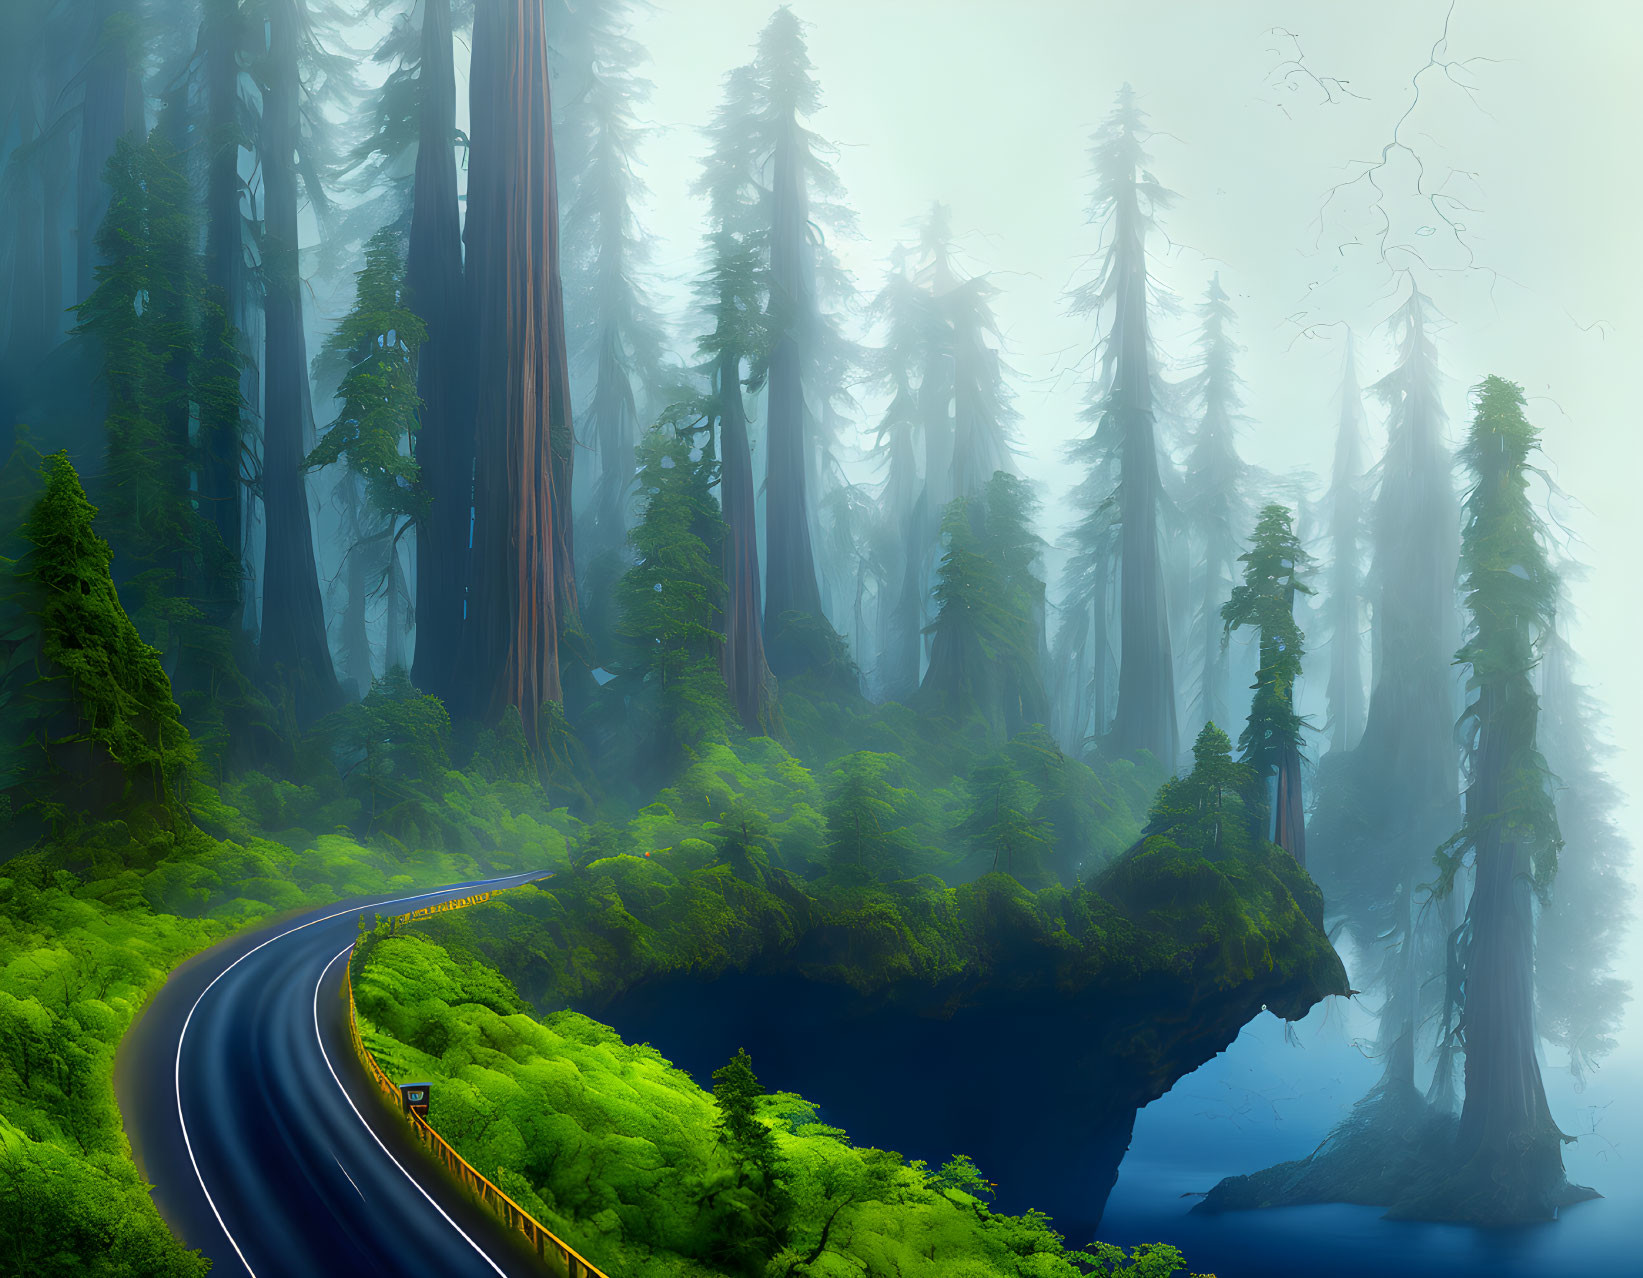 Serene forest scene: winding road through misty green foliage